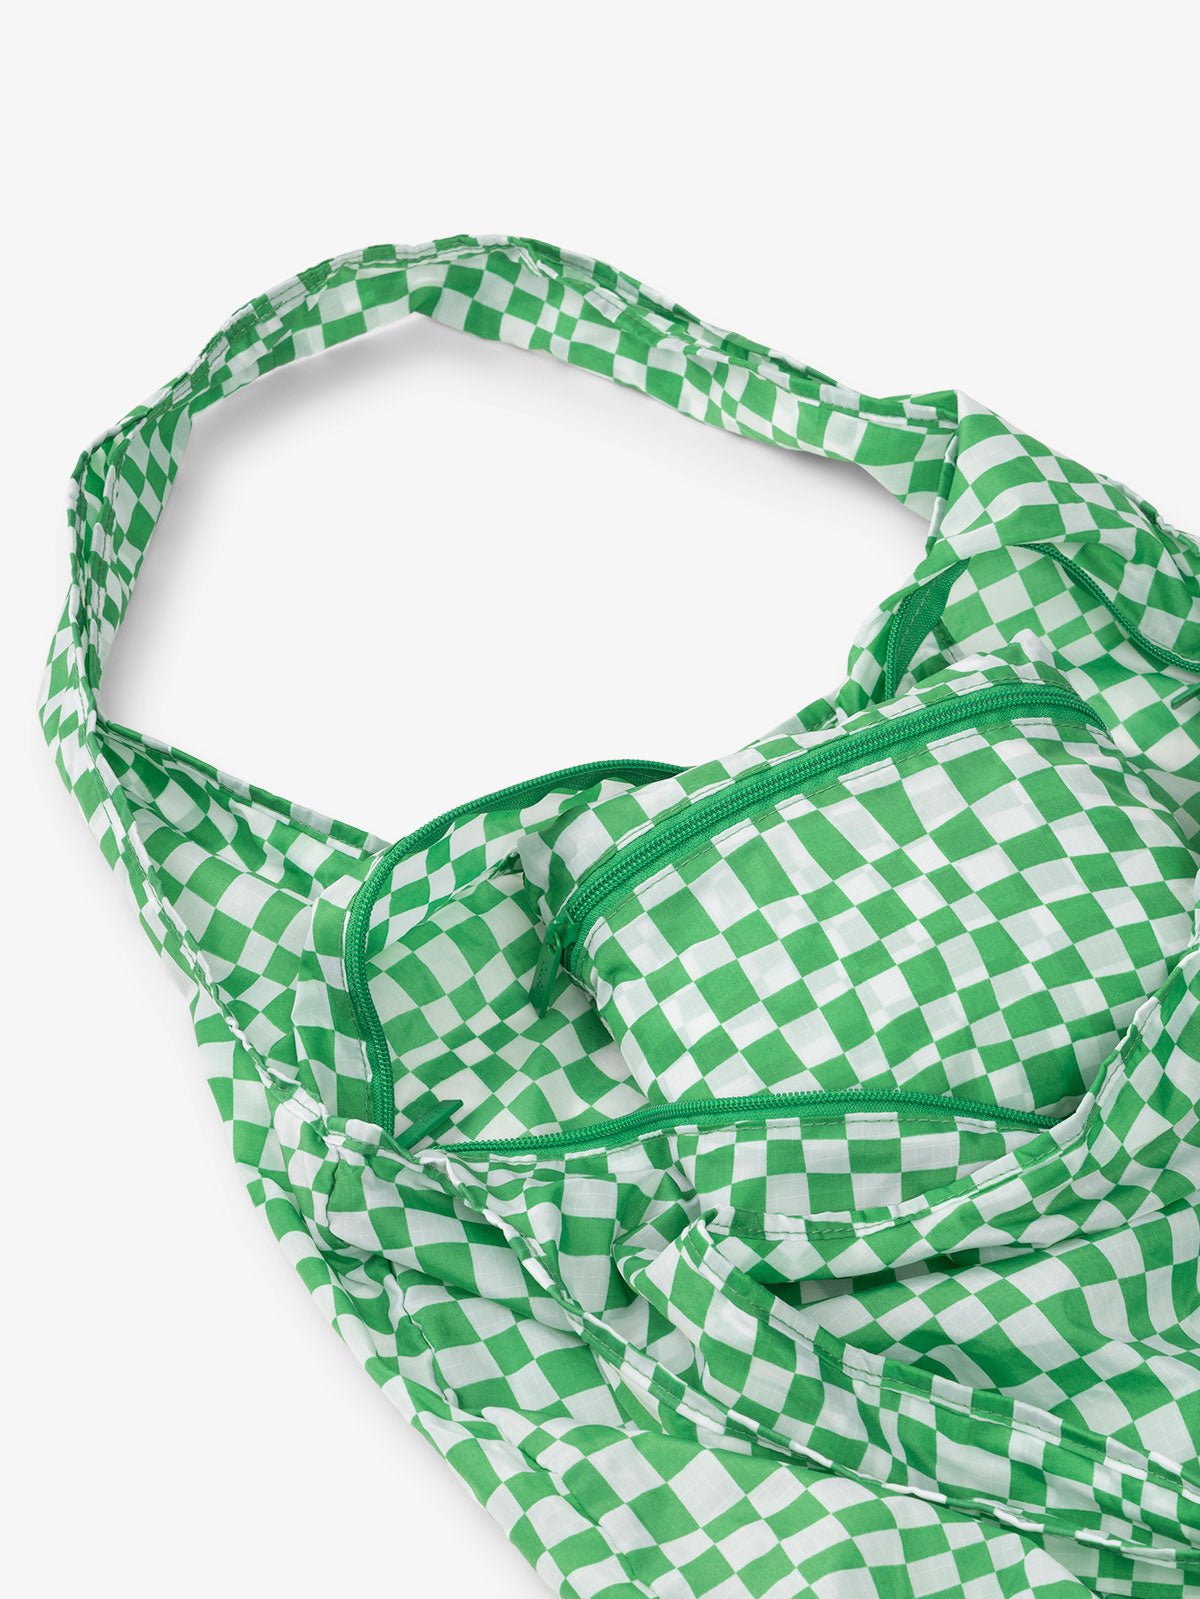 CALPAK Compakt shopping tote bag with interior zipper pocket in green checkerboard